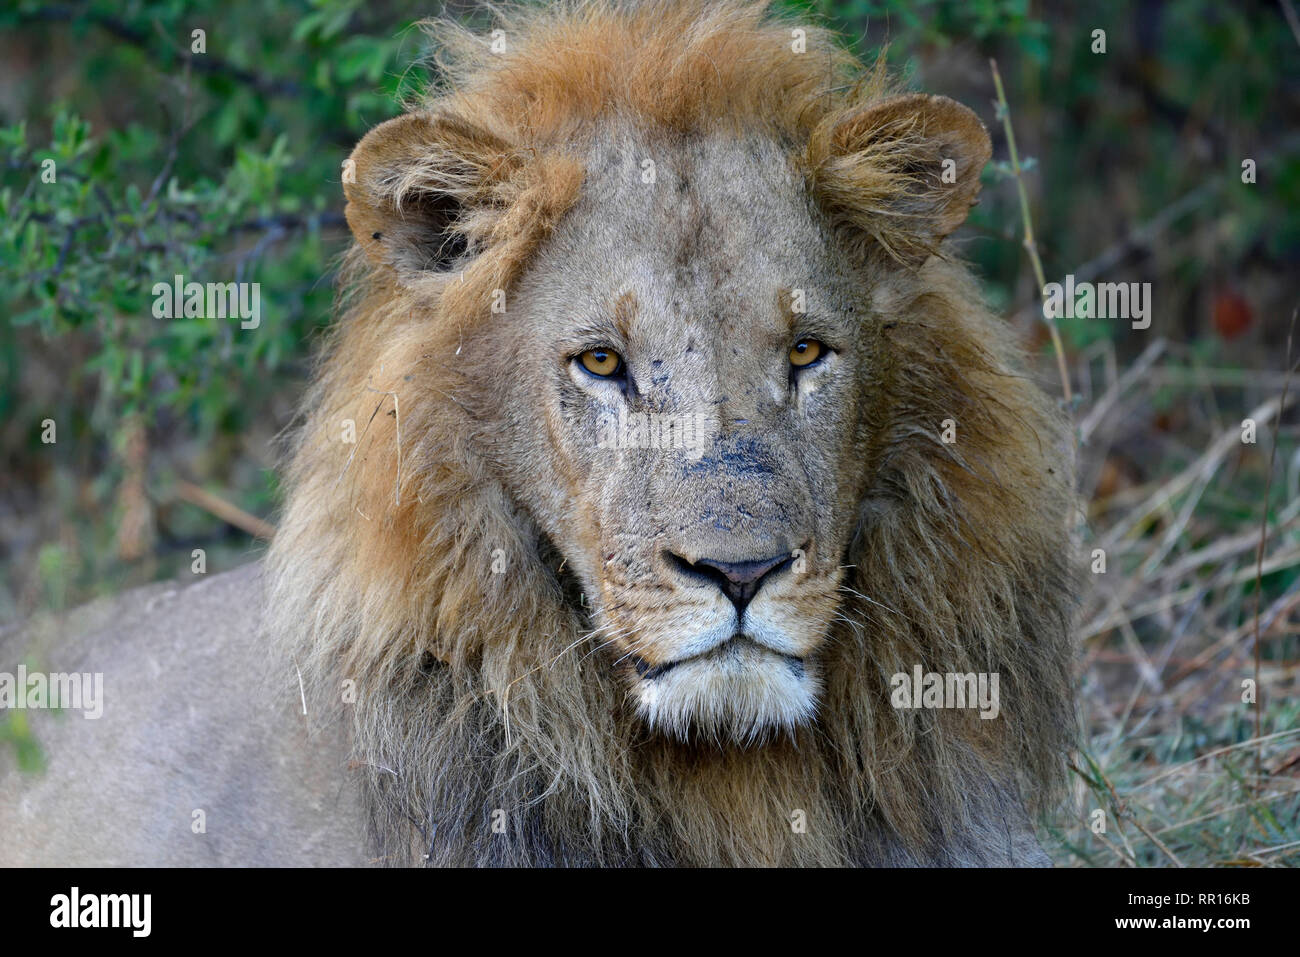 Zoología, mamíferos (Mammalia), León (Panthera leo), animal macho, zona Khwai, distrito noroccidental, Additional-Rights Okavang-Clearance-Info-Not-Available Foto de stock